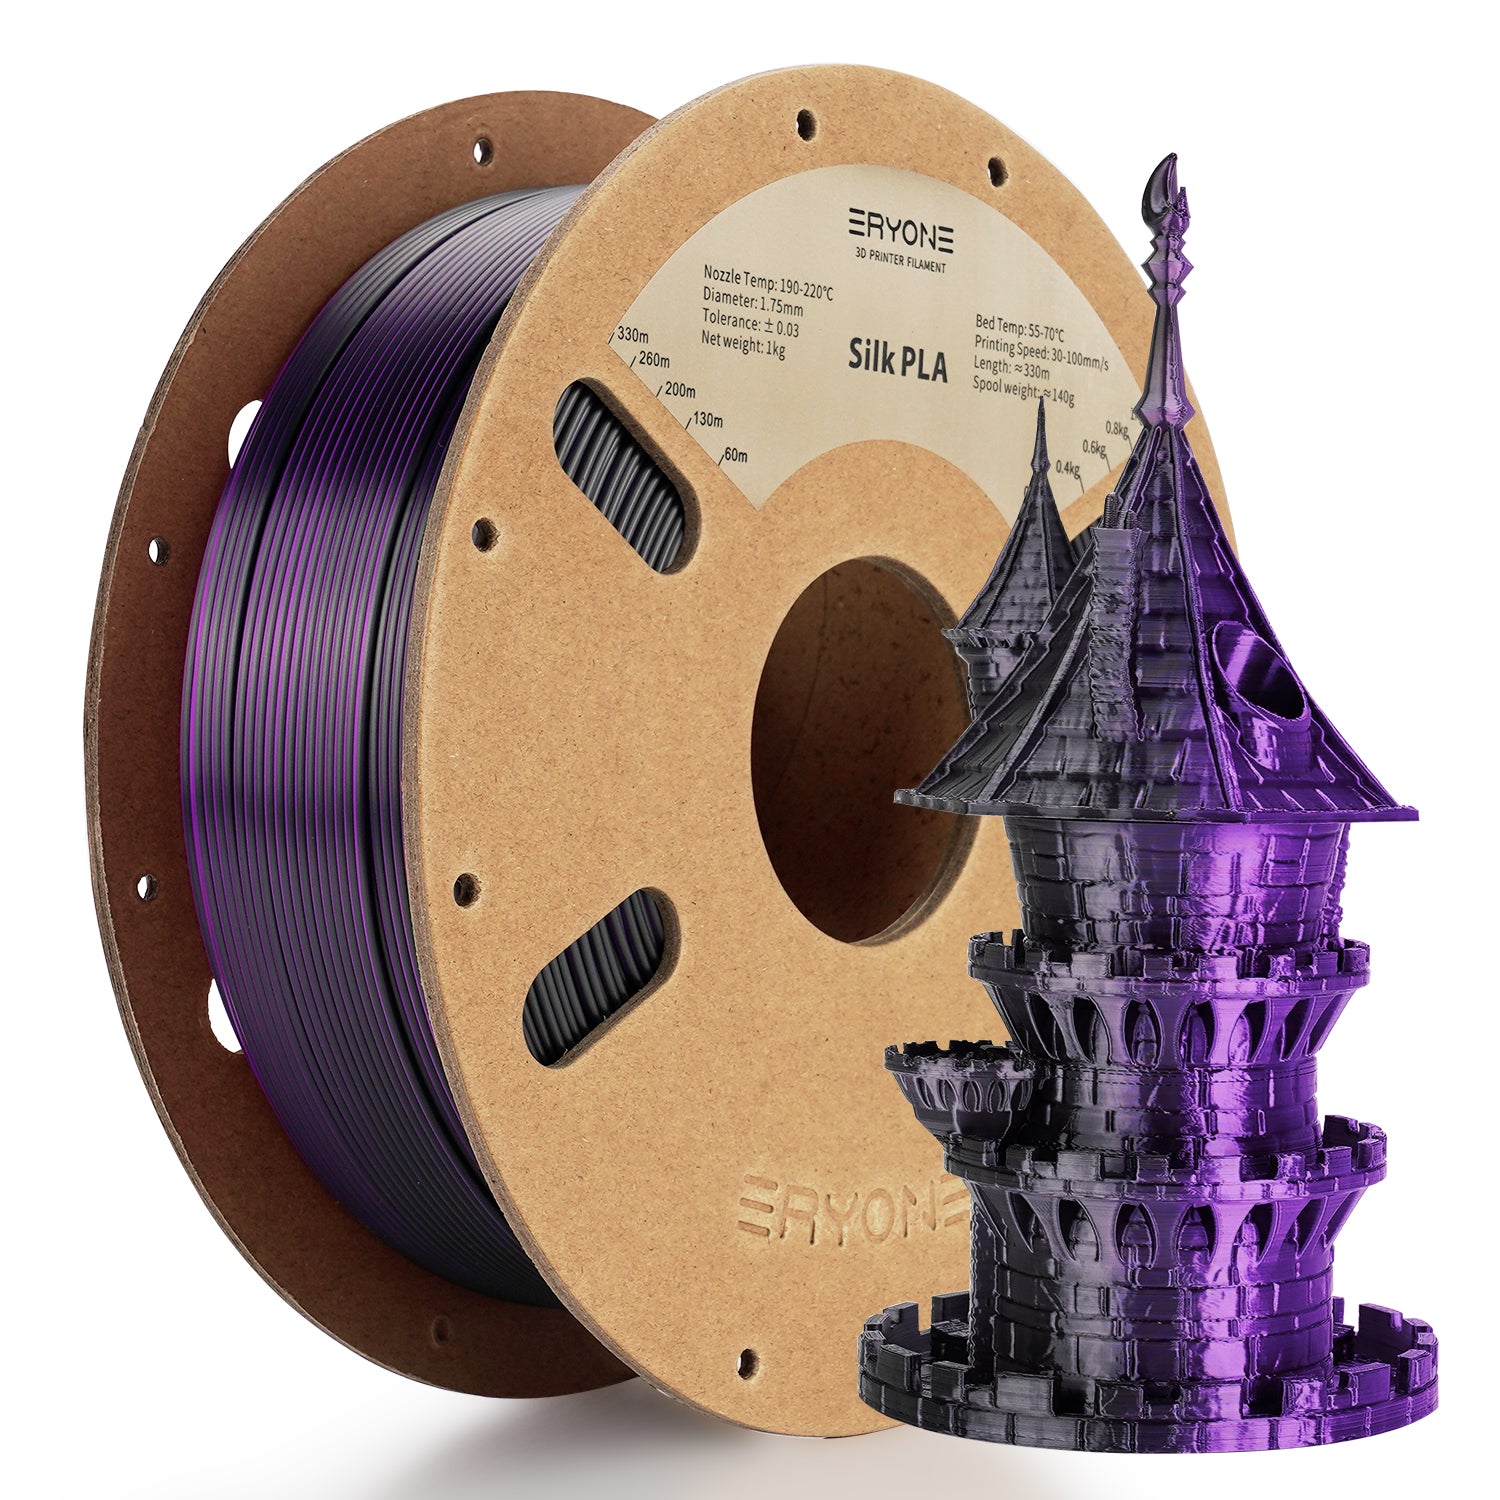 ERYONE 1kg (2.2LBS)/Spool 1.75mm Silk Dual-Color PLA Filament for 3D Printers,Accuracy +/- 0.03mm 